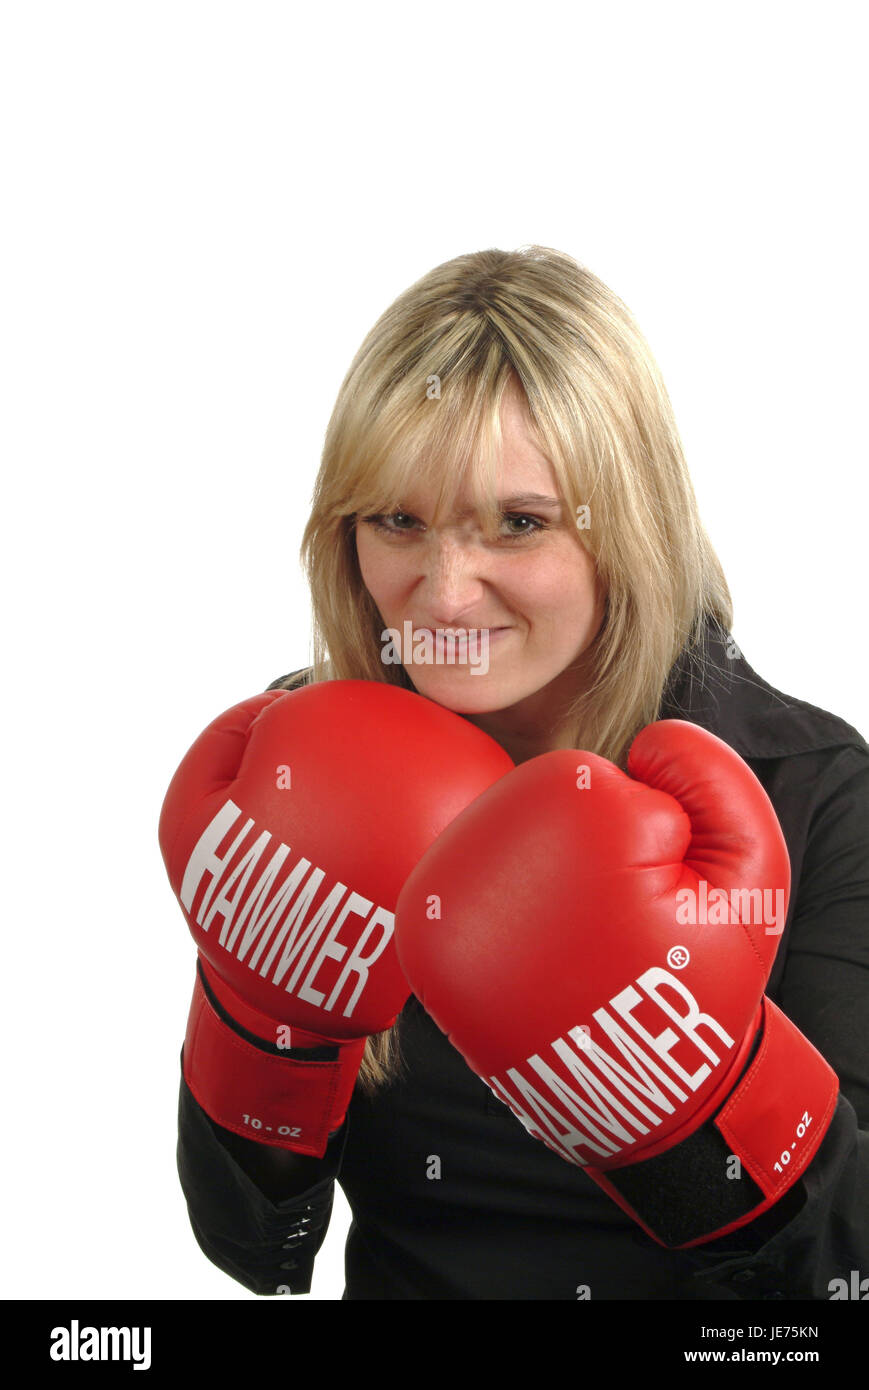 Junge Frau mit Boxhandschuhen Stockfoto